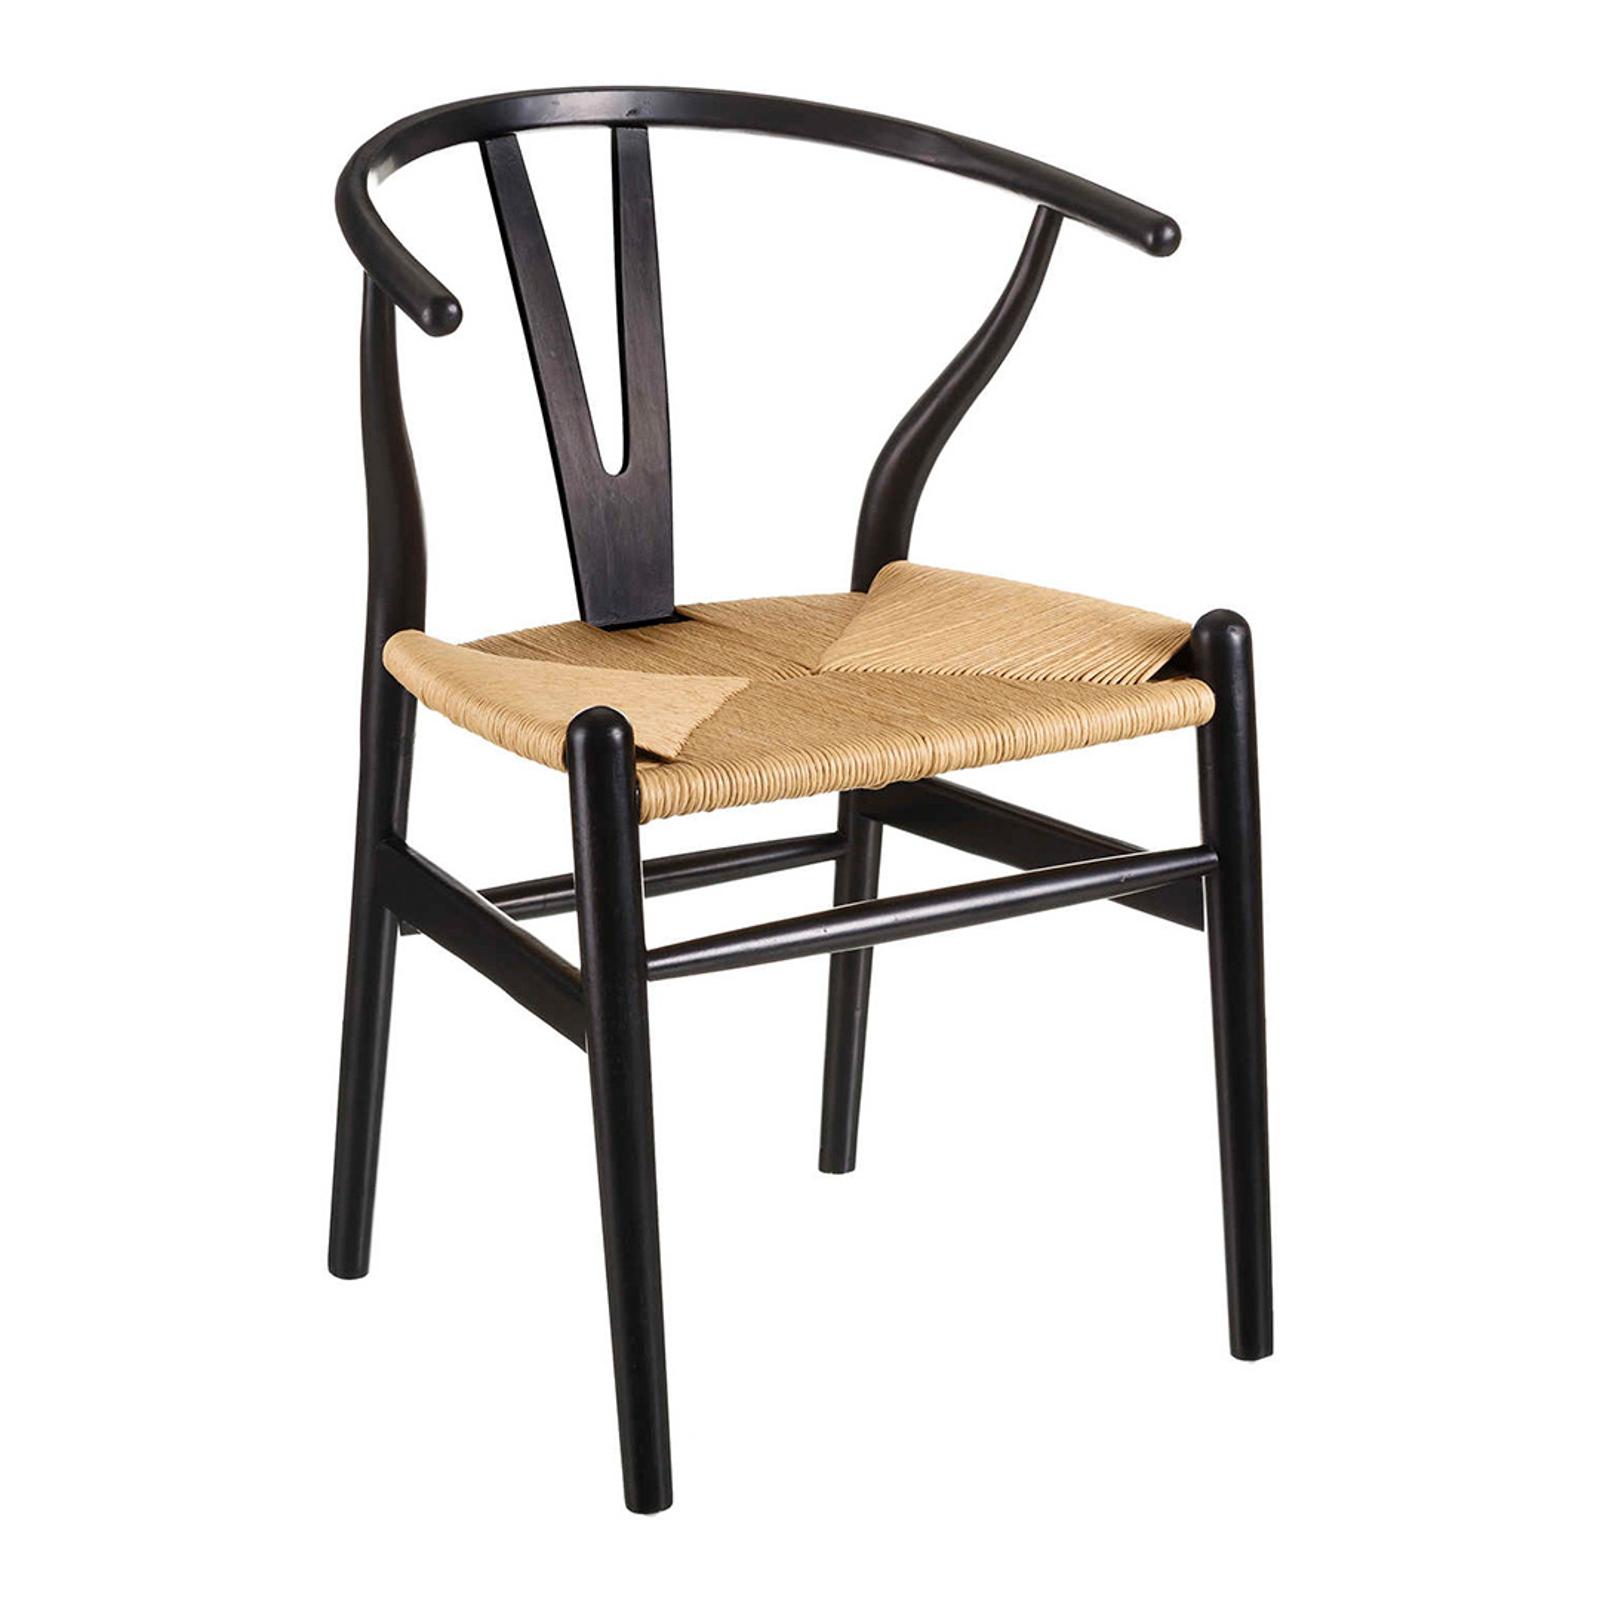 Chair Black/Natural Birch - BrandAlley